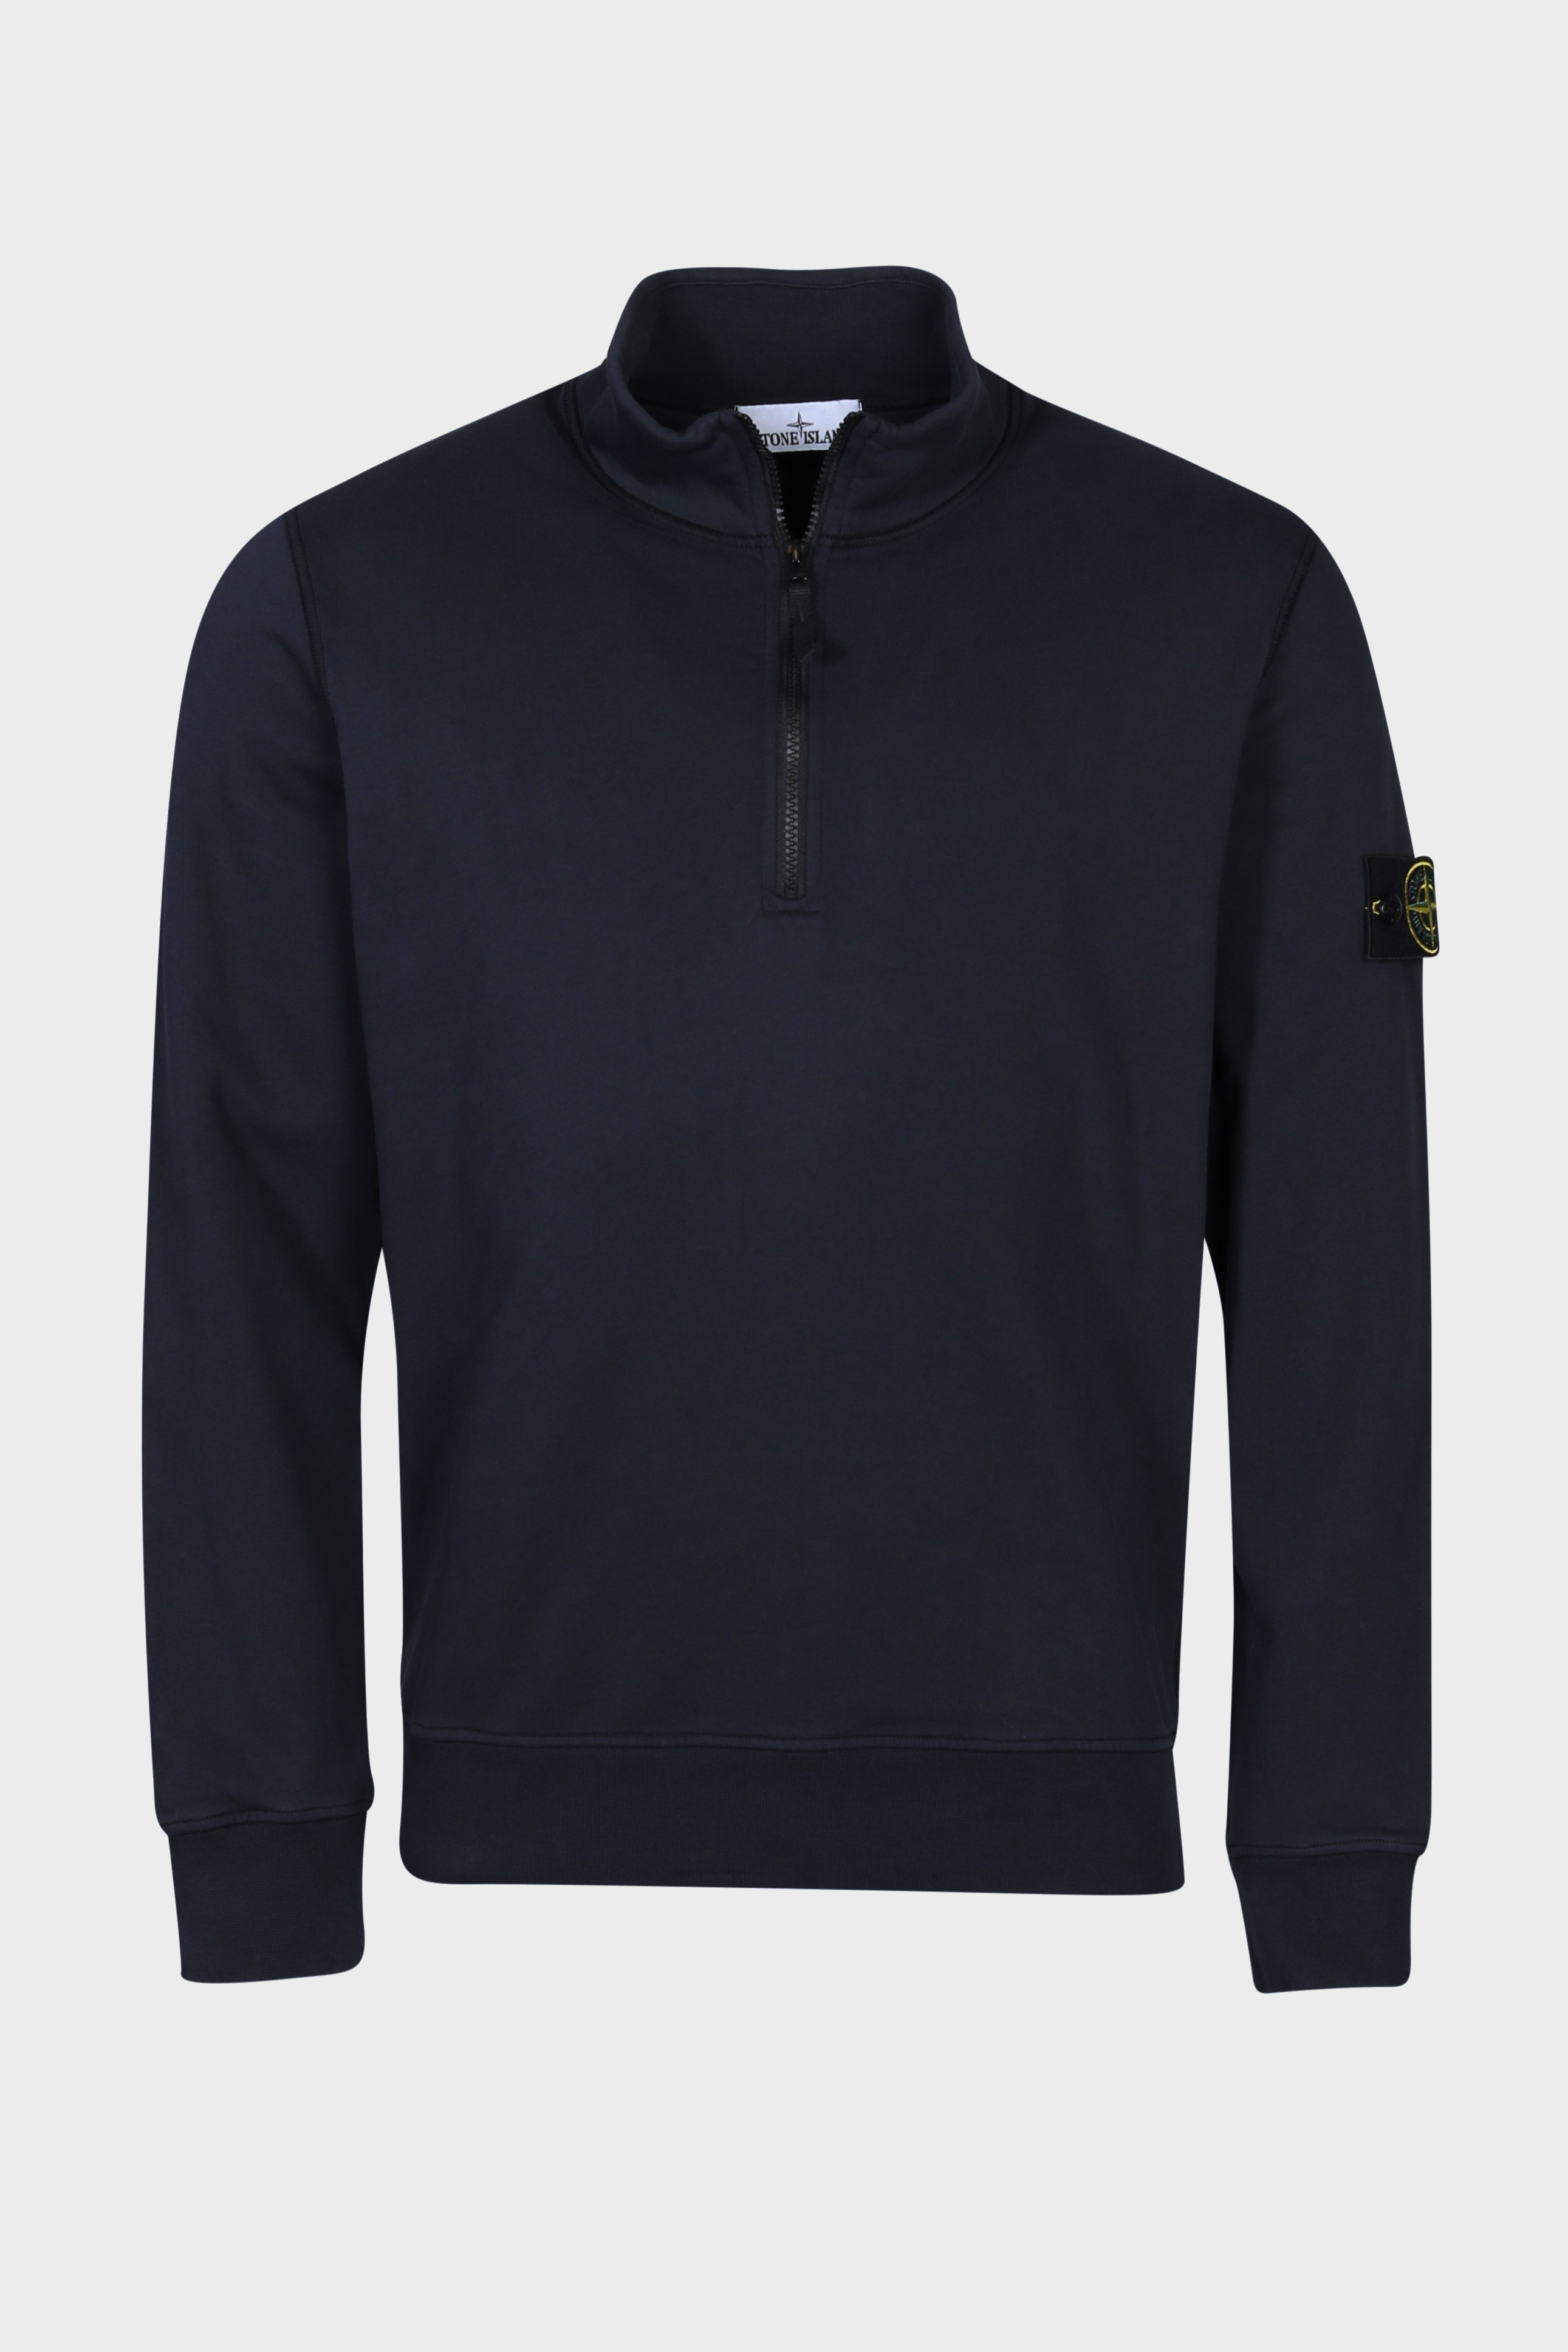 STONE ISLAND Half Zip Sweatshirt in Navy 3XL